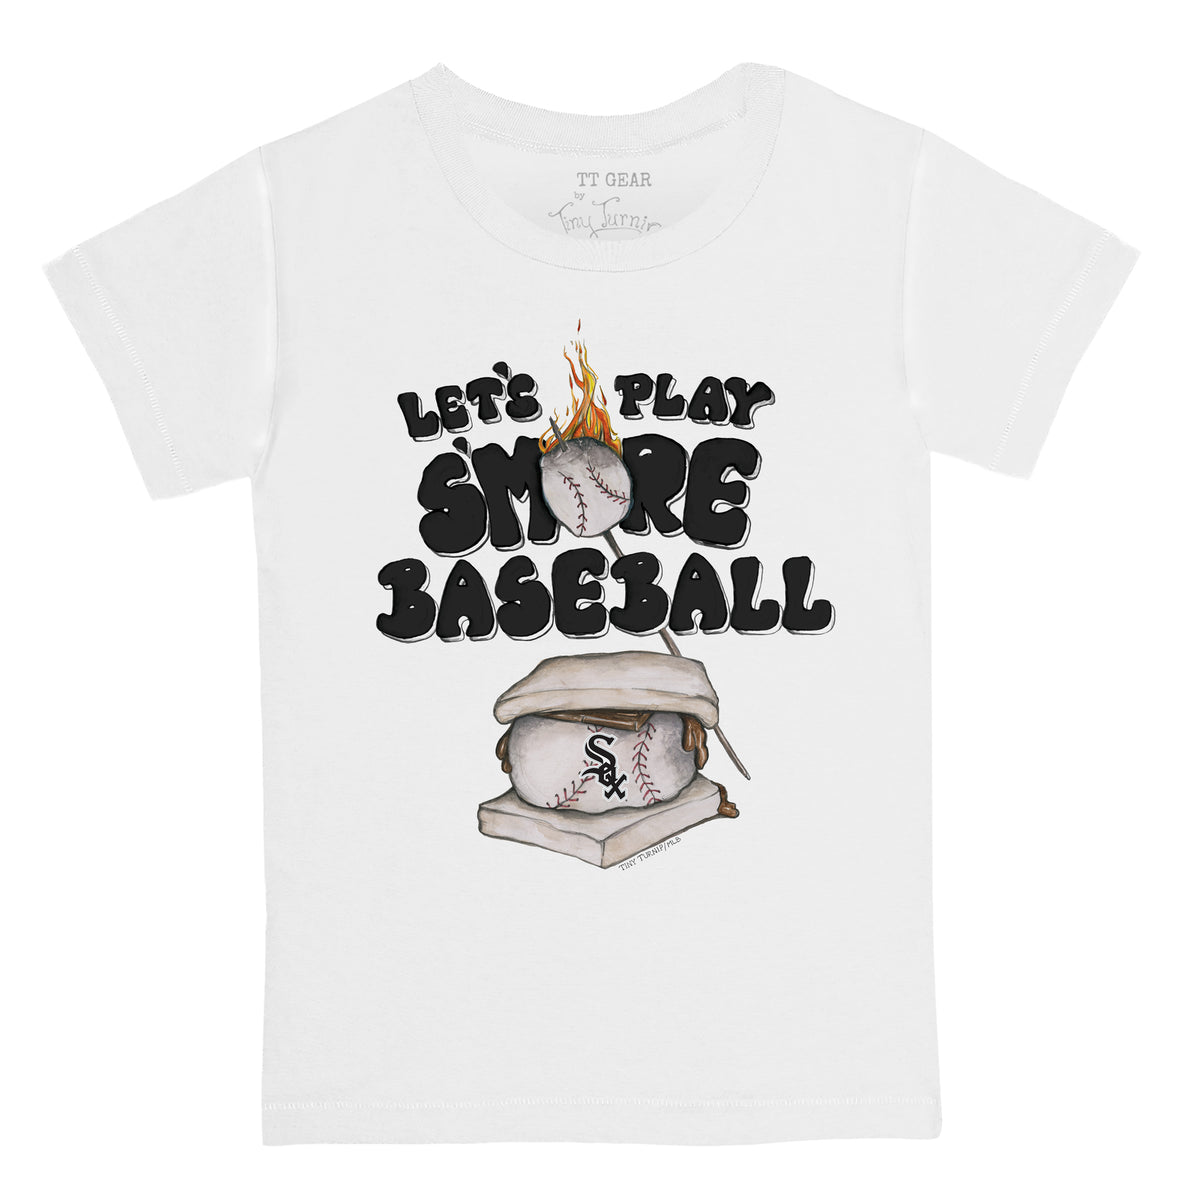 Lids Oakland Athletics Tiny Turnip Girls Youth Baseball Cross Bats Fringe T- Shirt - Black